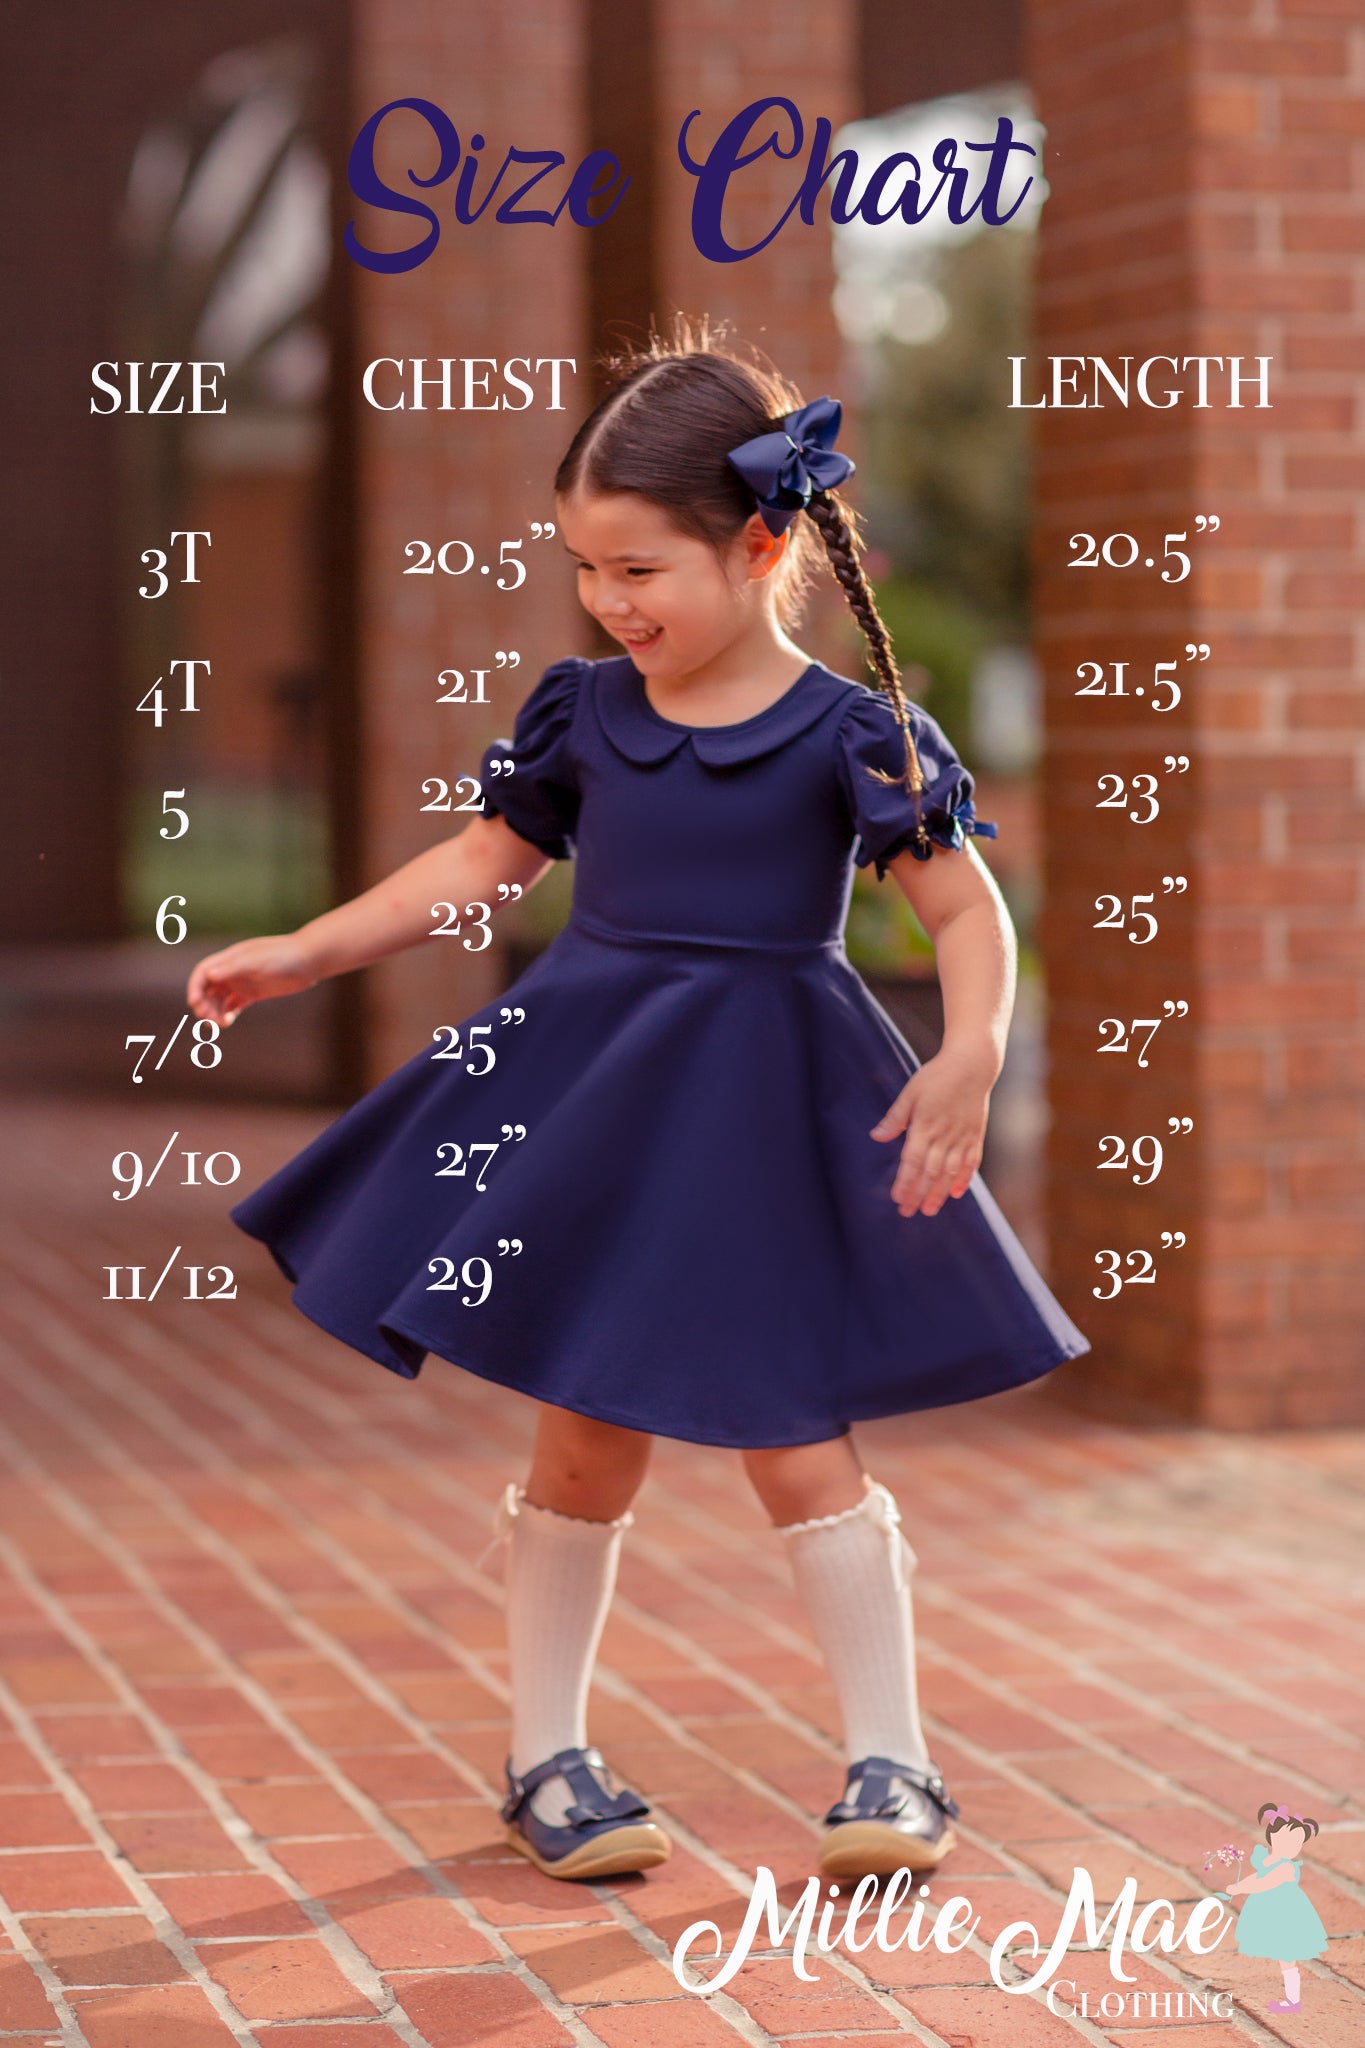 Lila School Uniform Dress with Pockets